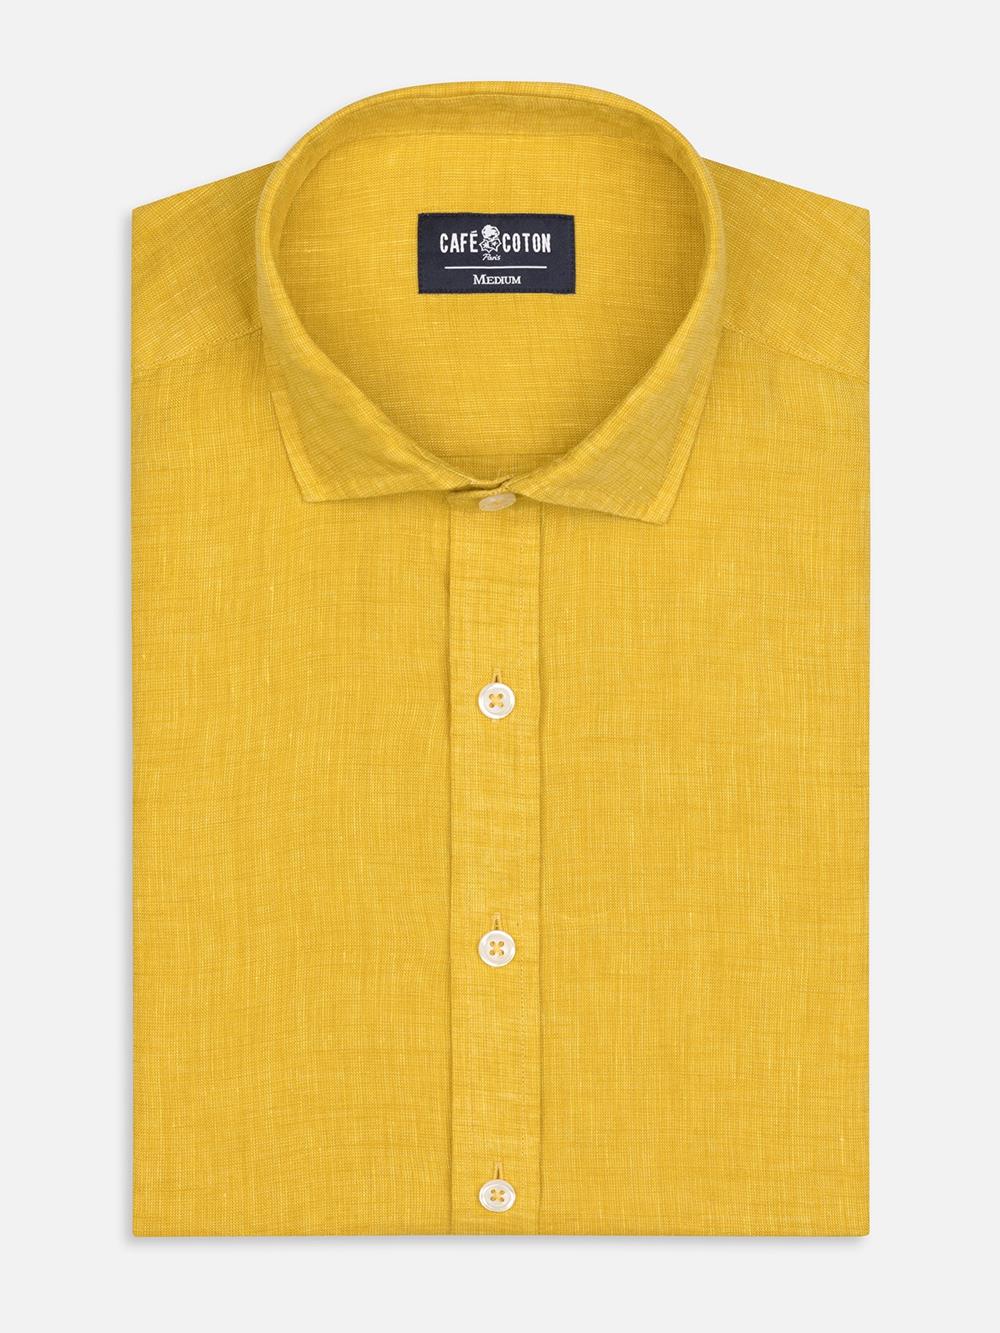 Olaf yellow linen shirt 